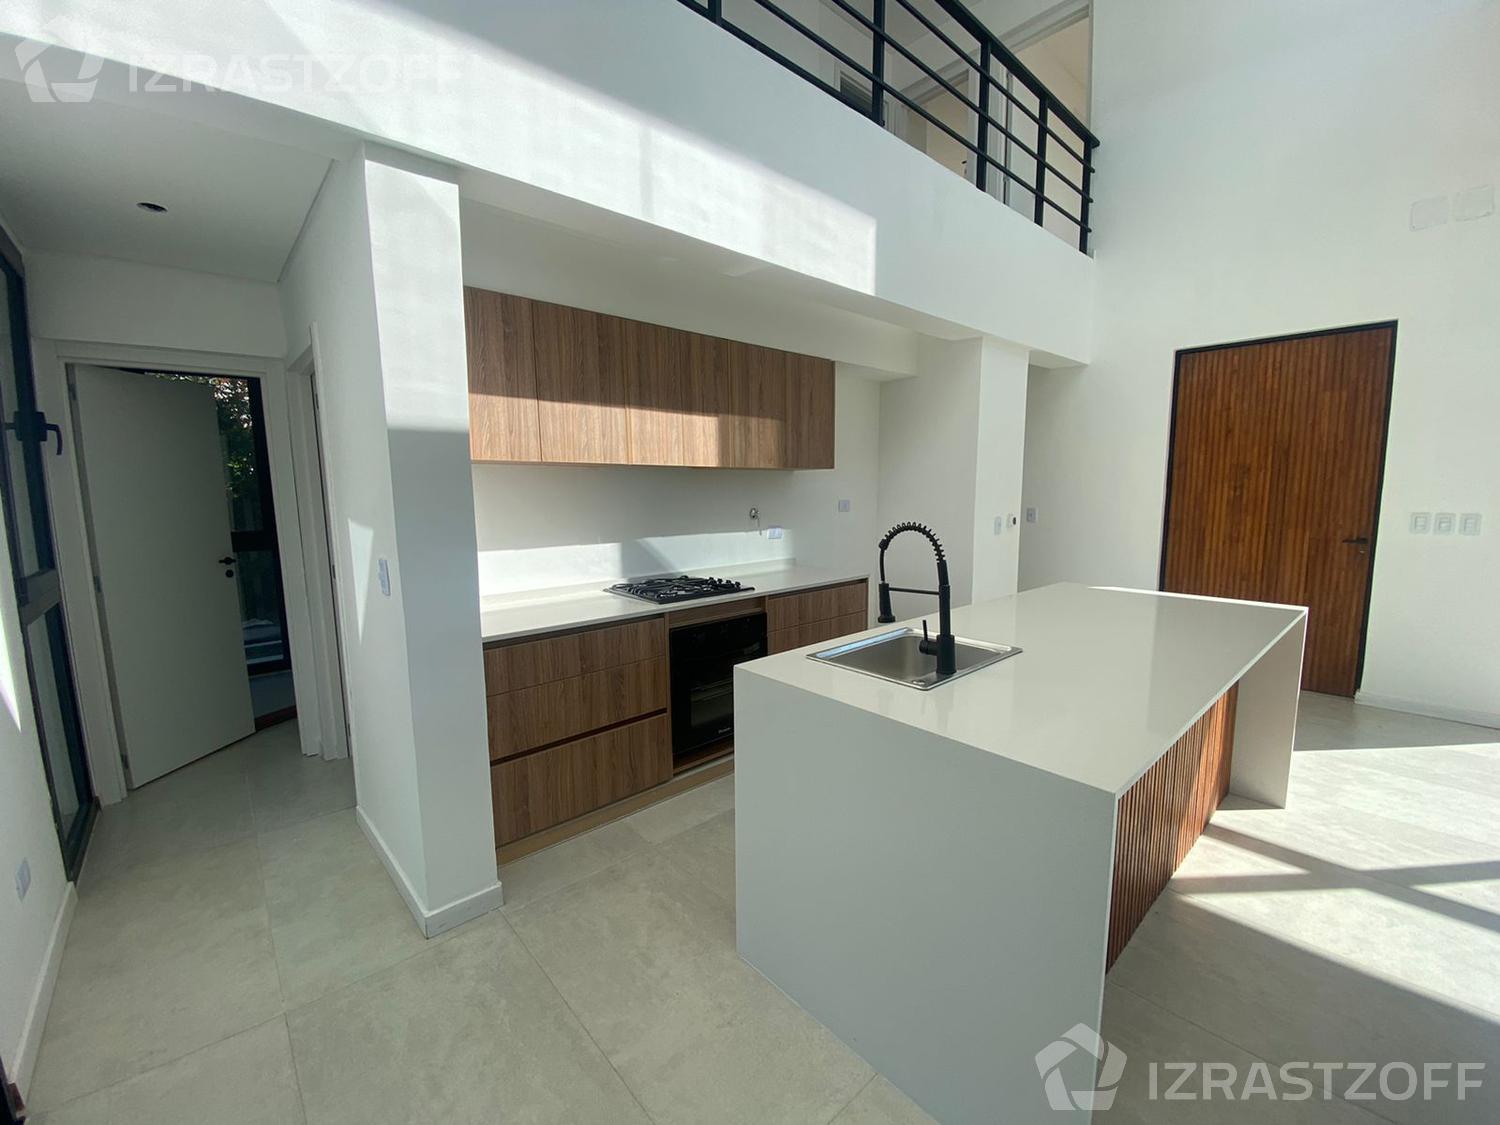 #5126584 | Sale | House | Pilar Del Este (Izrastzoff Agentes Inmobiliarios)